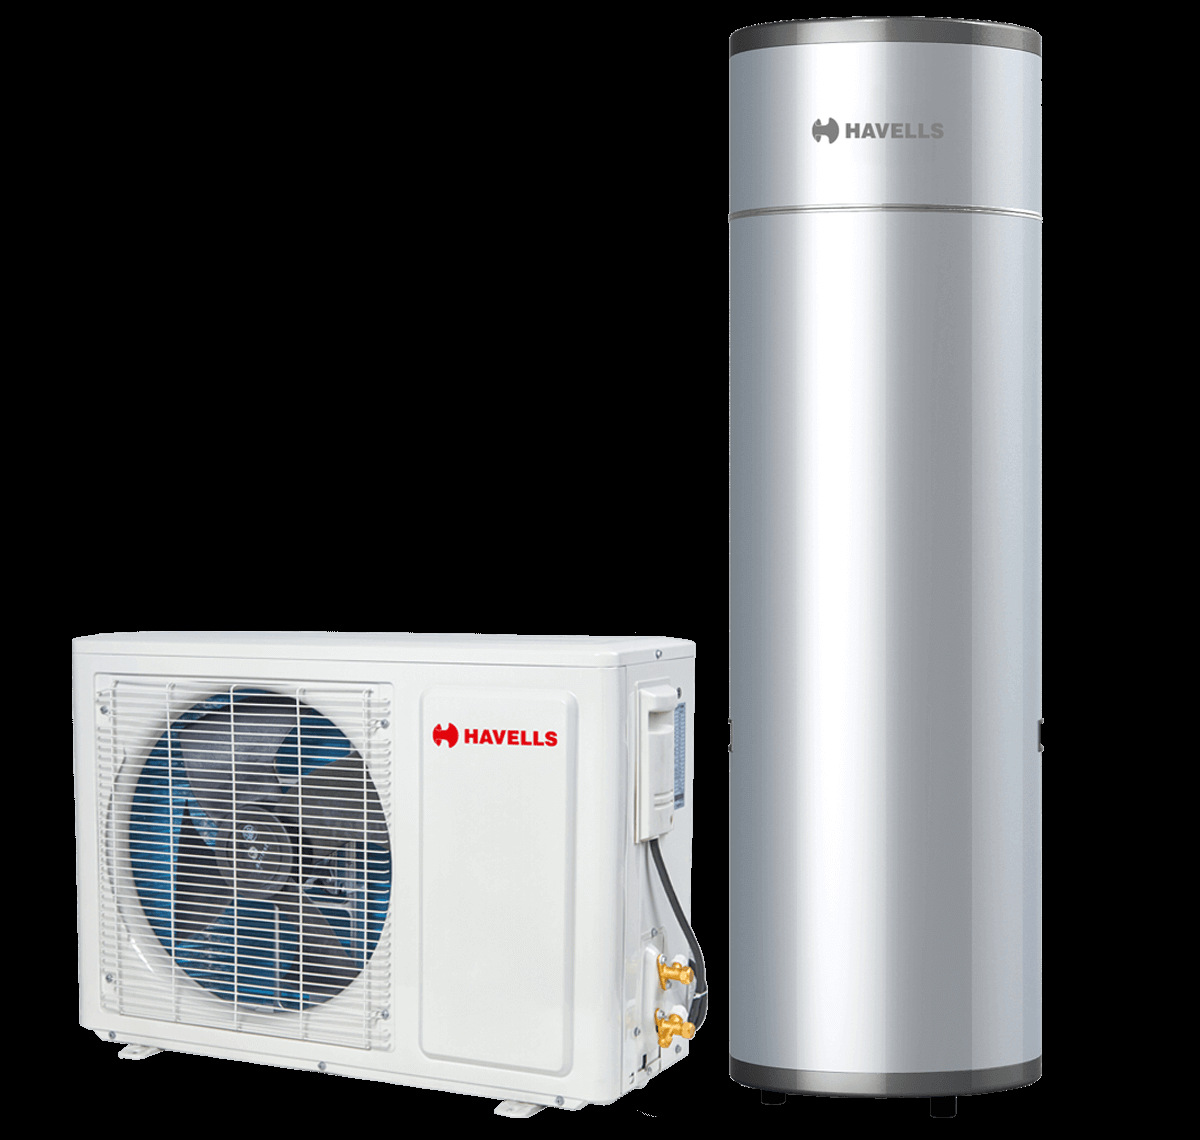 Havells heat pump water heater